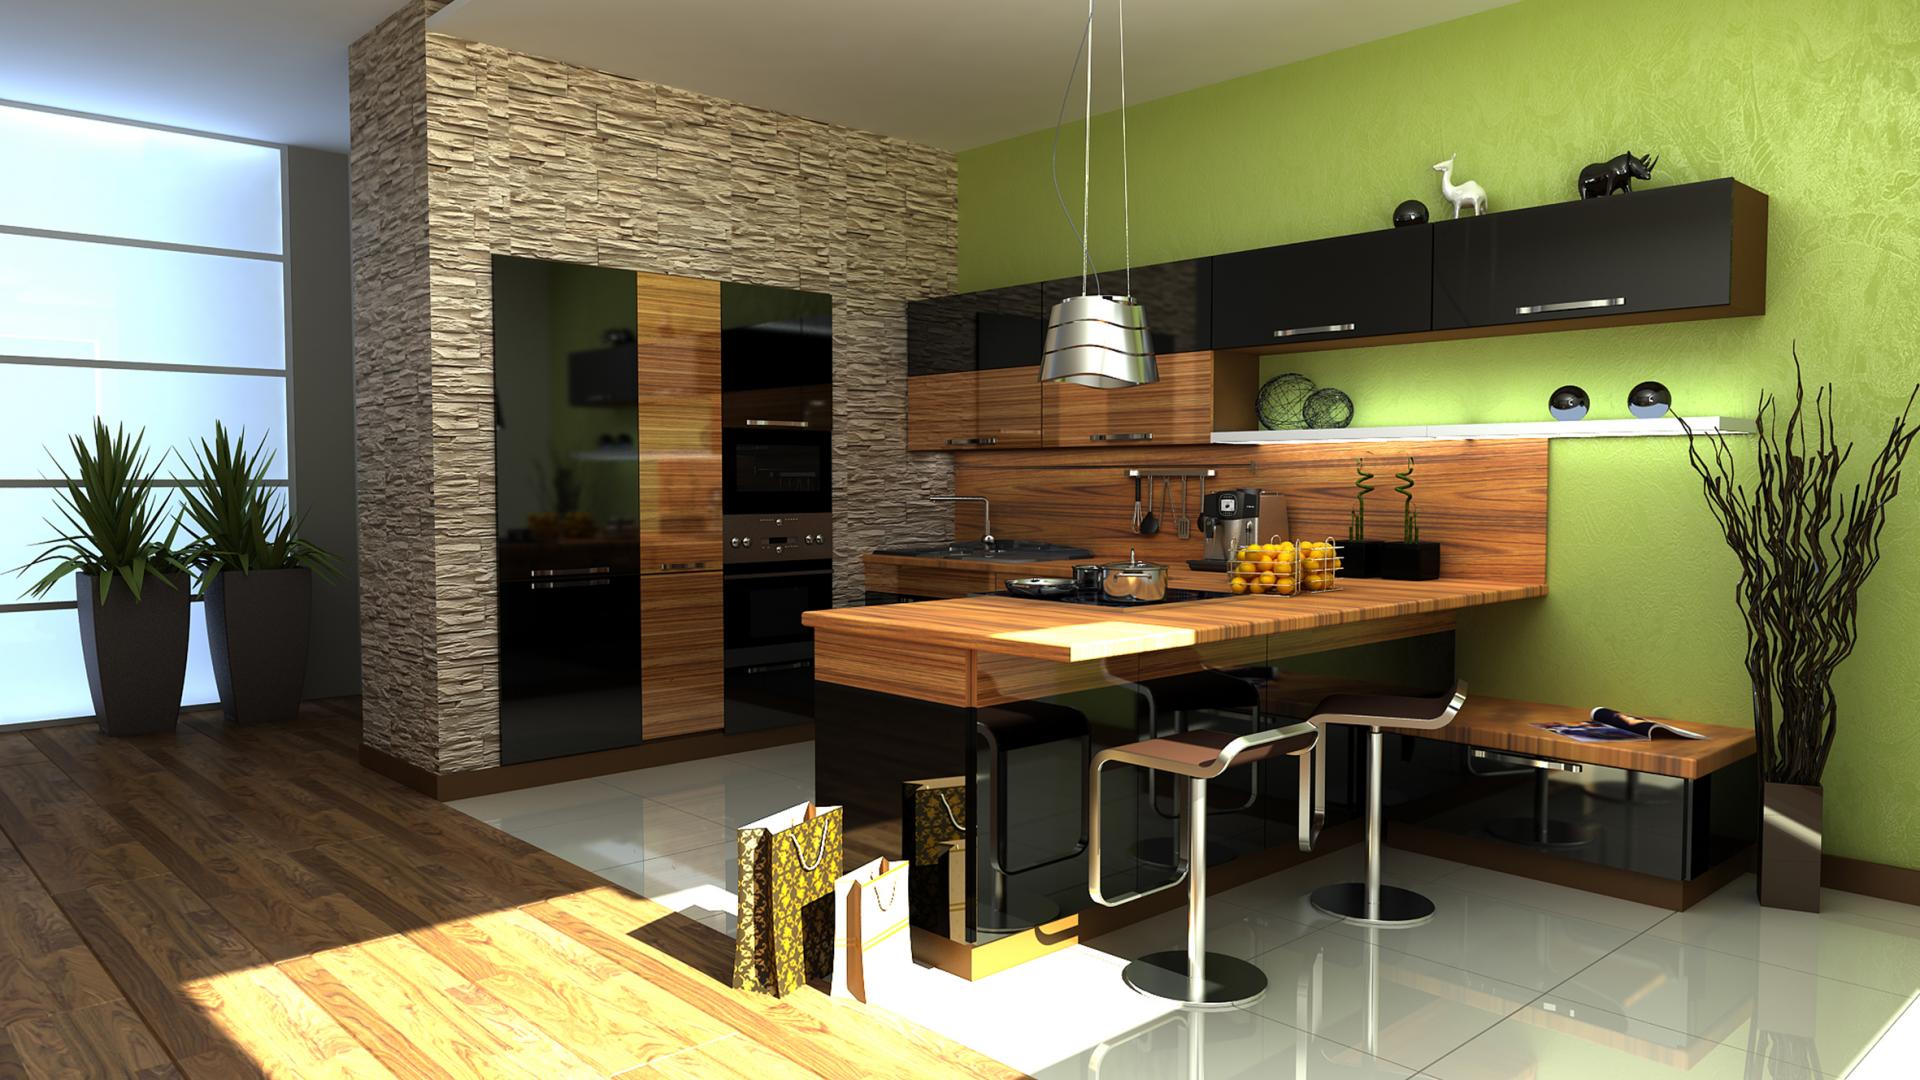 kitchen wallpaper images,room,interior design,furniture,property,countertop